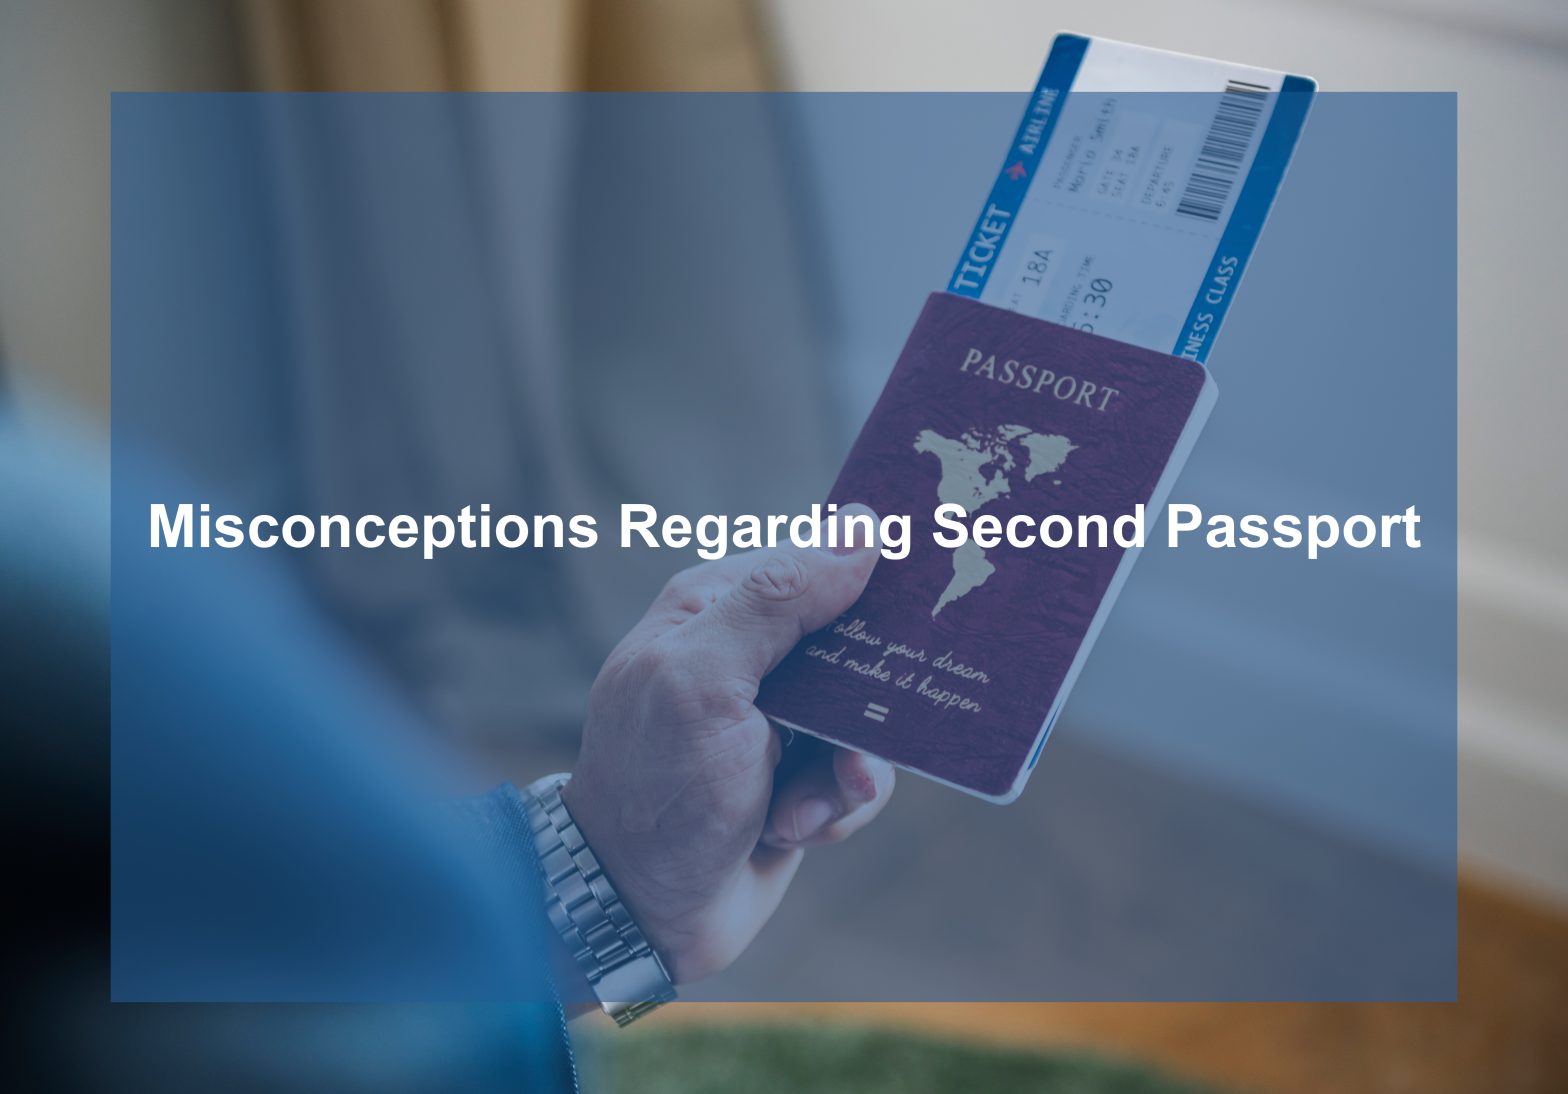 Second Passport Expert reveals misconception regarding second passport